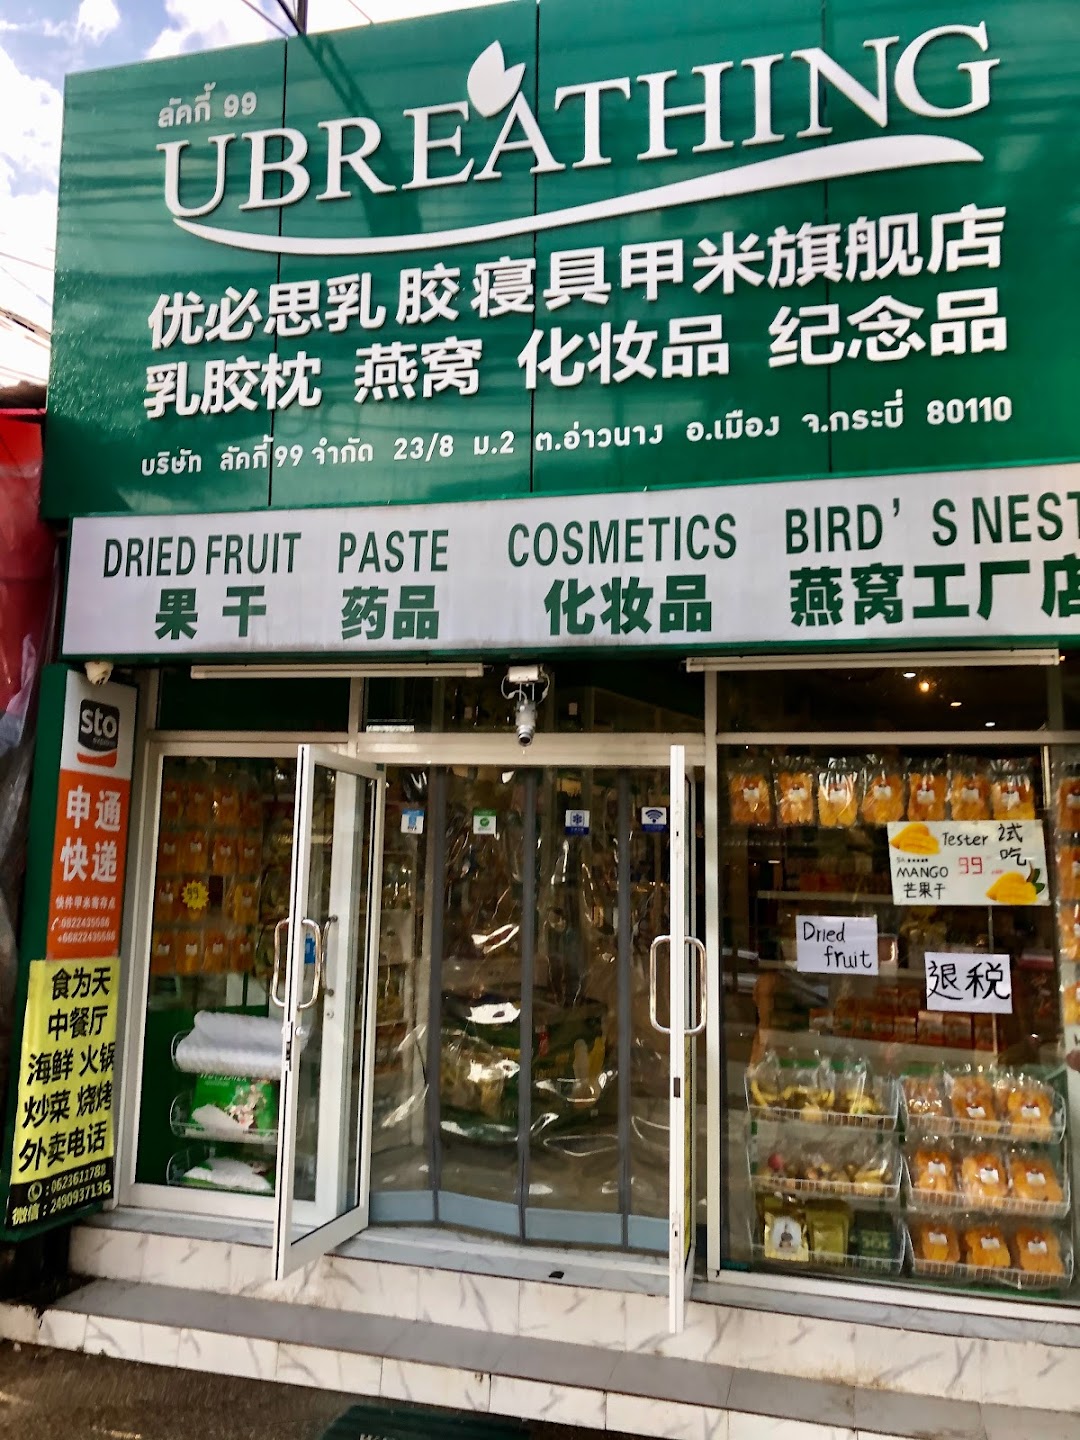 Dried fruit - cosmetics